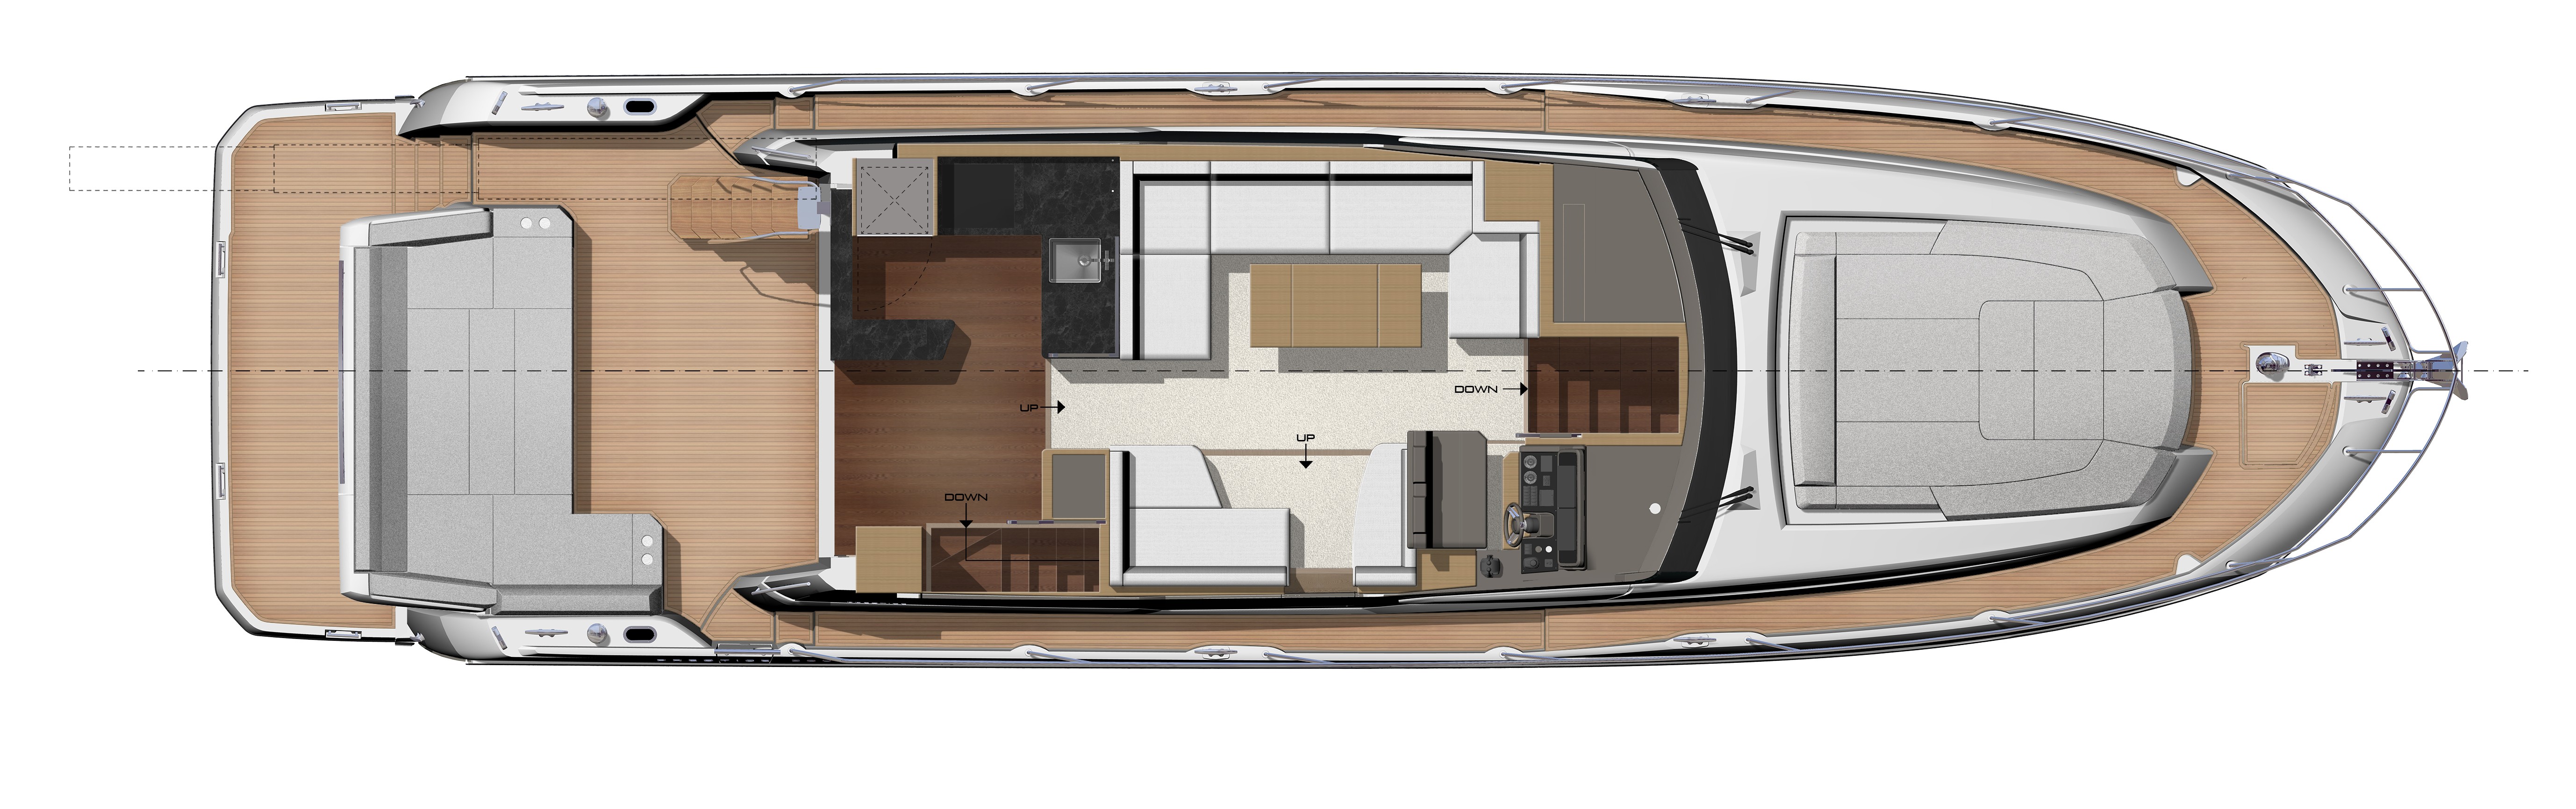 590 interior main deck